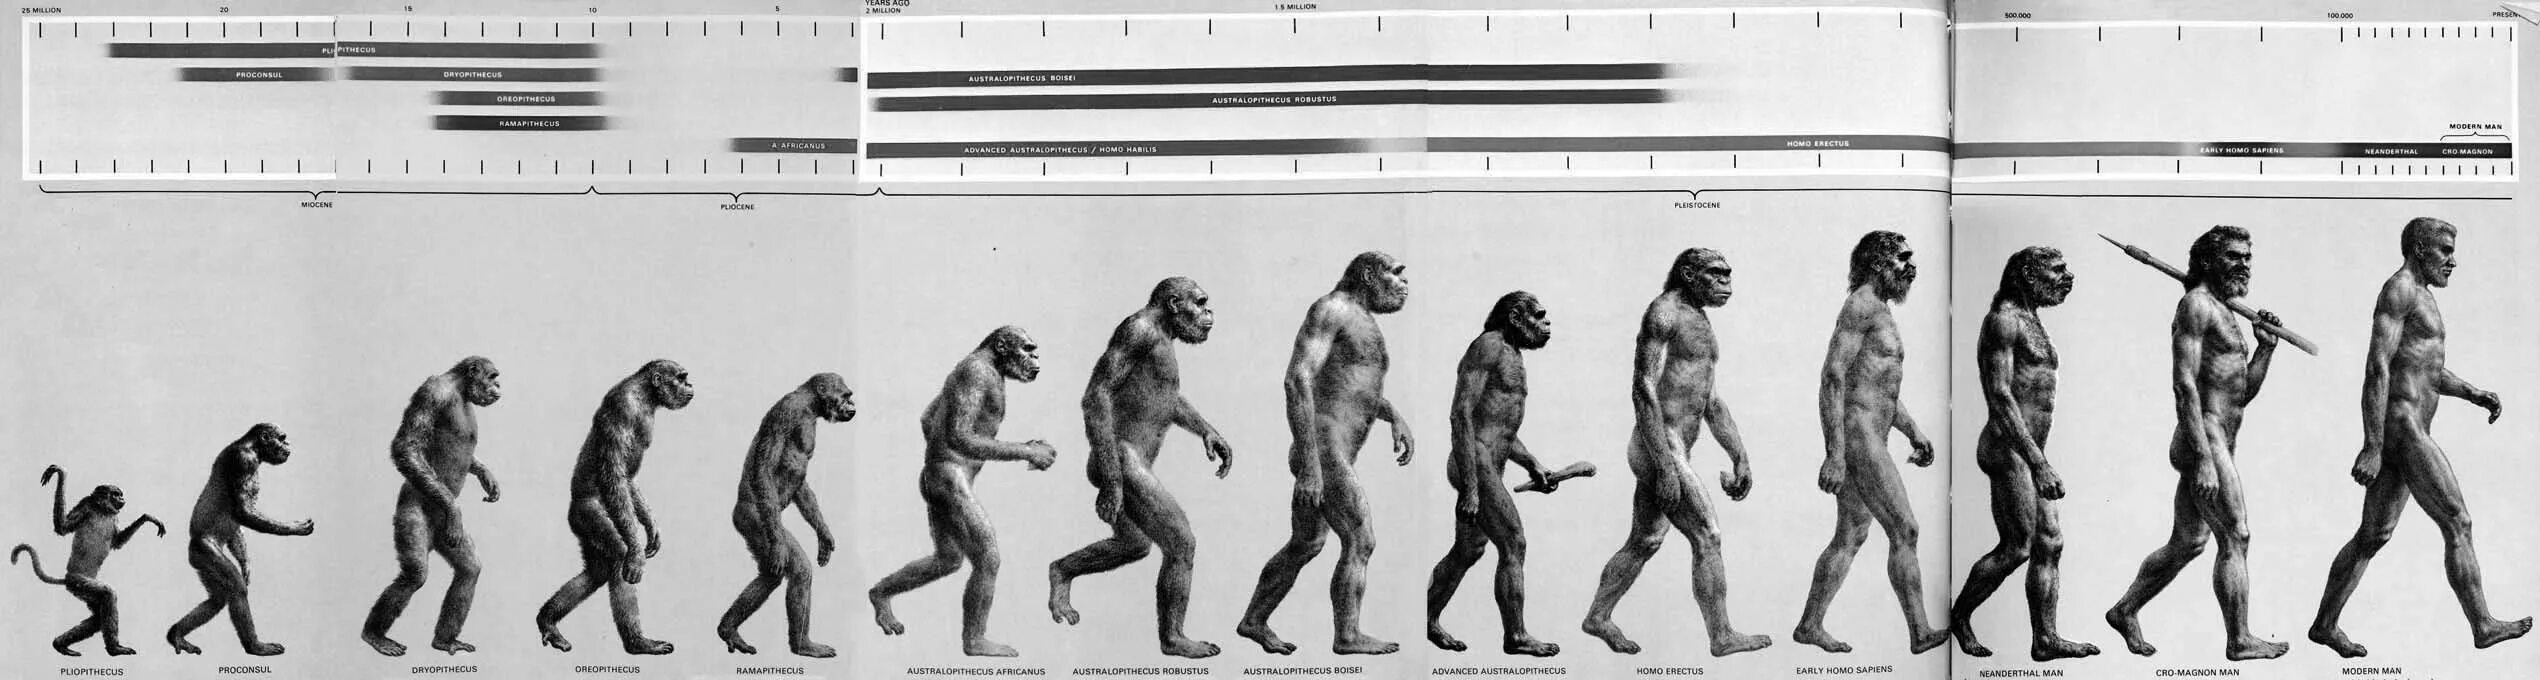 Этапы эволюции хомо сапиенс. Эволюцию обезьяны в хомо сапиенс. Ступени развития человека хомо сапиенс. Этапы эволюции человека от австралопитека до homo sapiens.